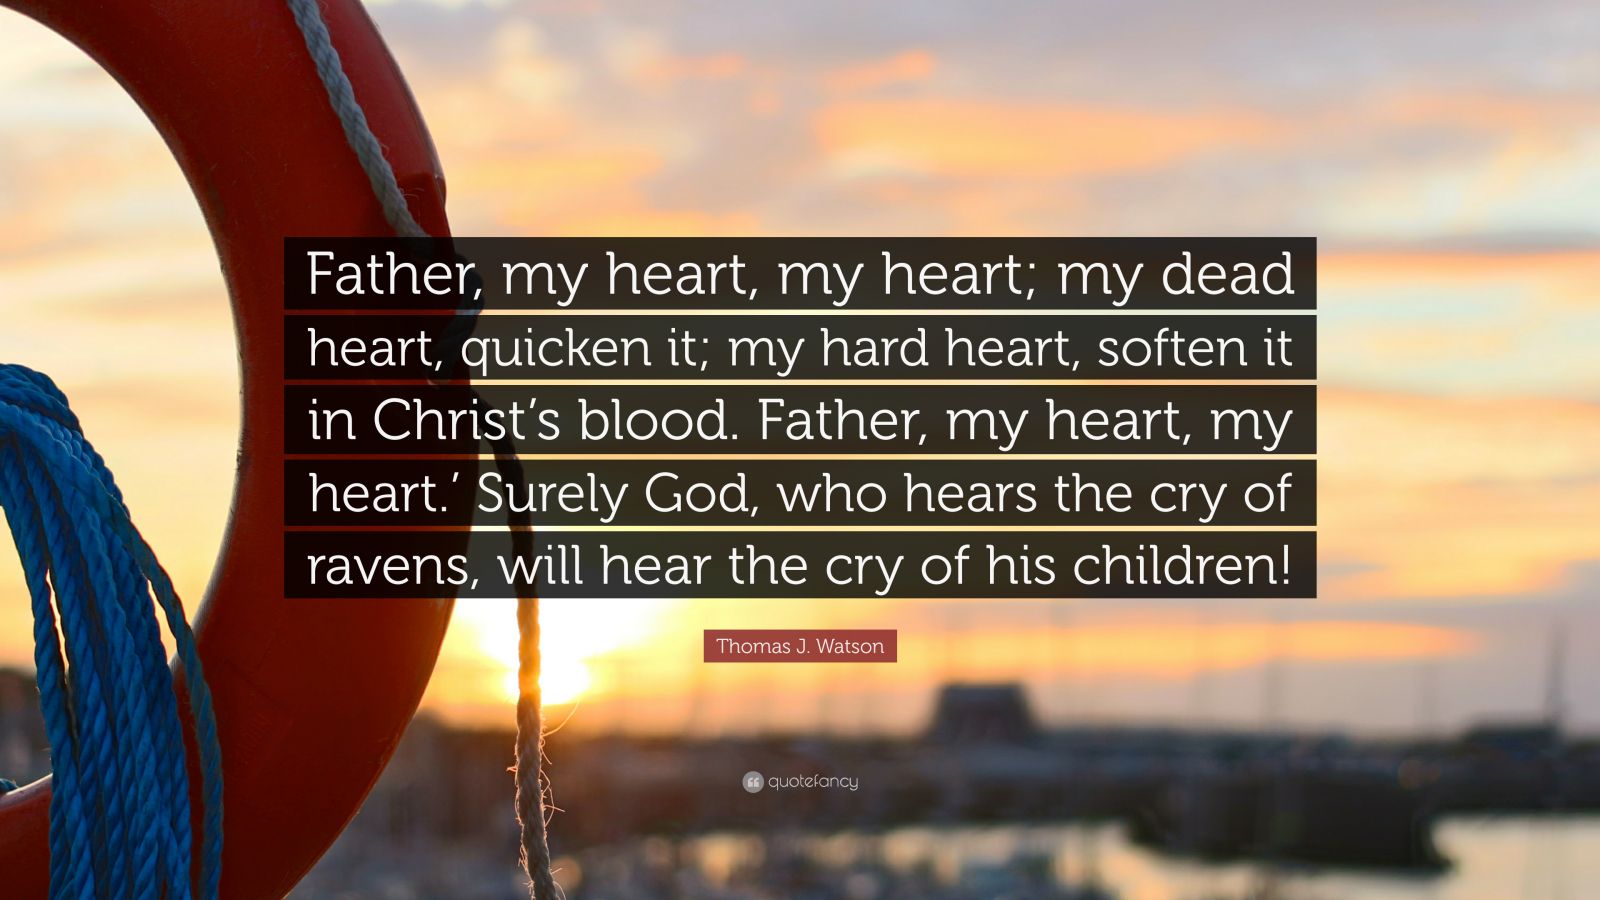 Thomas J. Watson Quote: “Father, my heart, my heart; my dead heart, quicken  it; my hard heart, soften it in Christ's blood. Father, my heart, my ...”